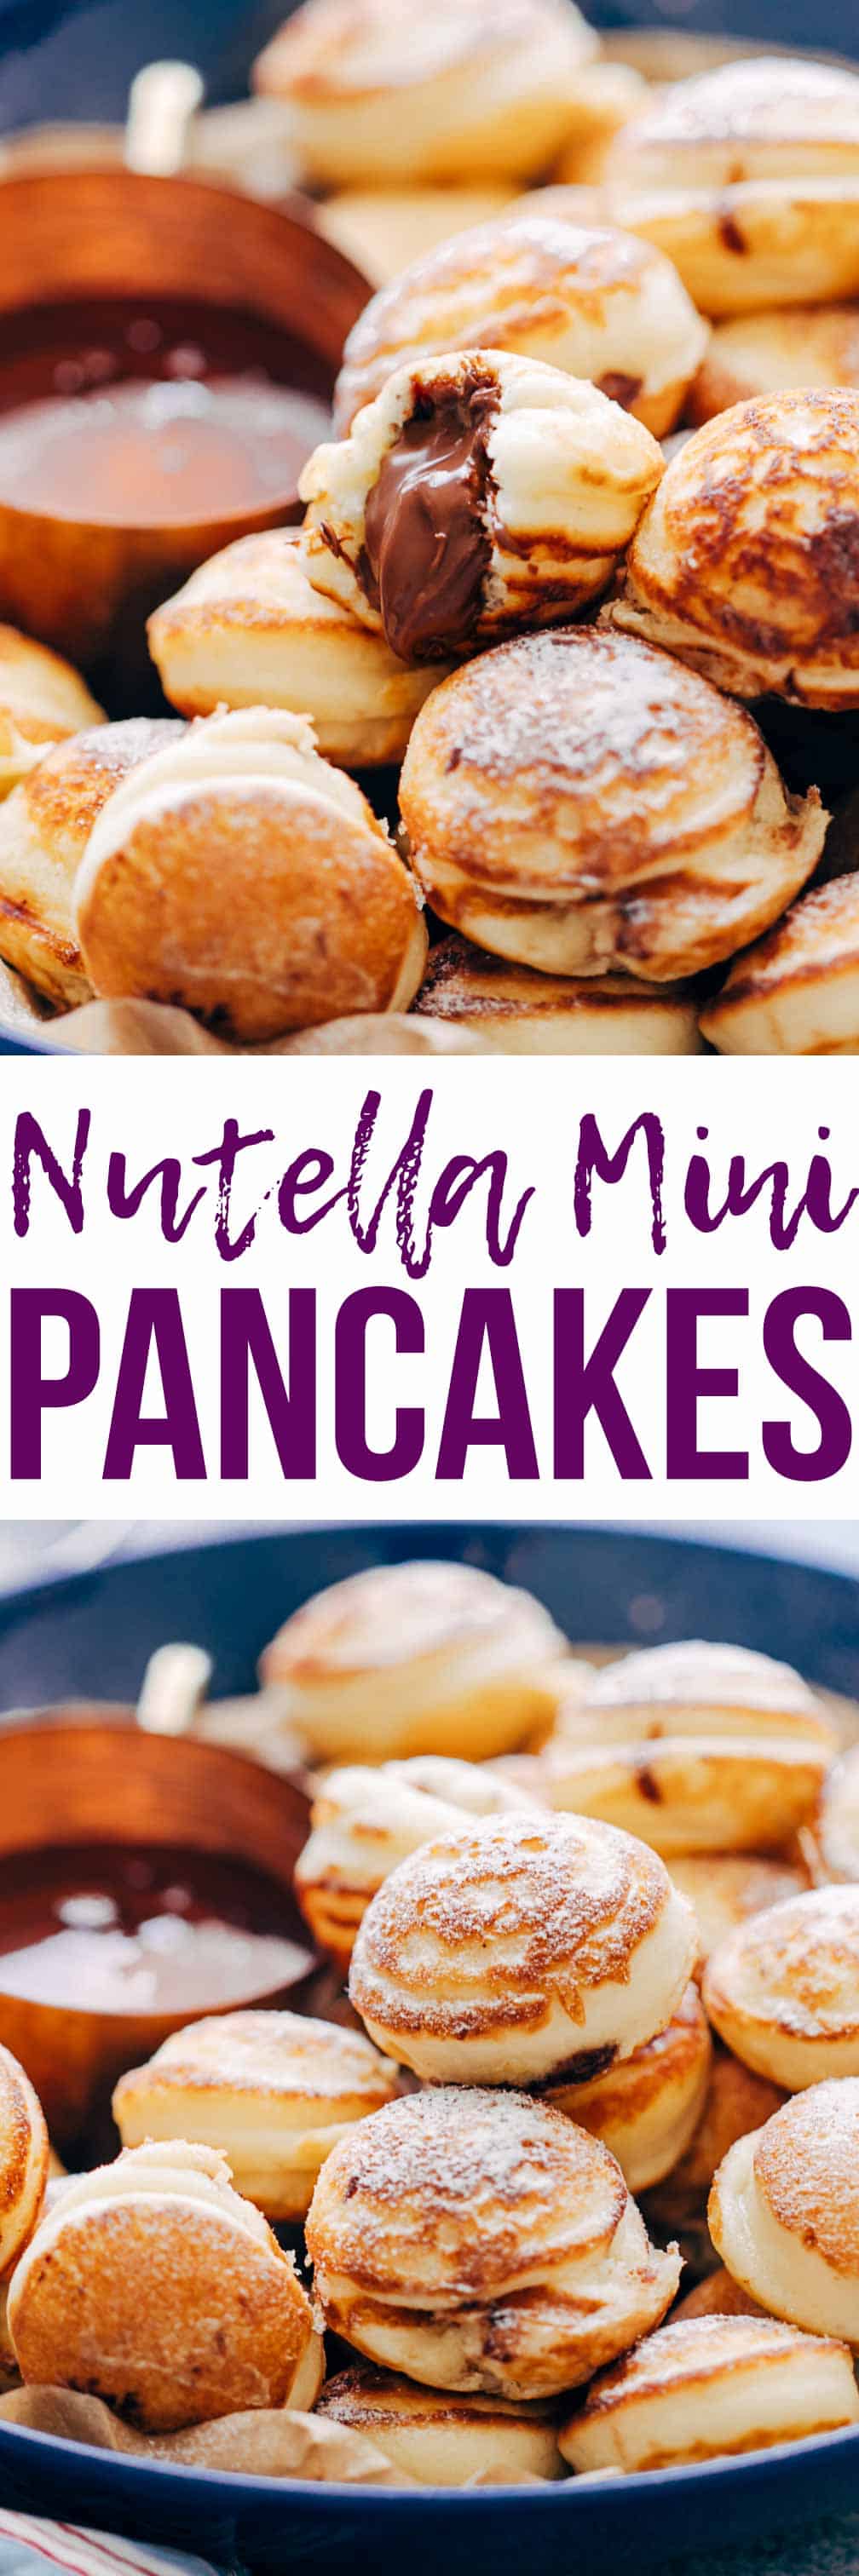 Chocolate Stuffed Mini Pancake Bites collage with text overlay.